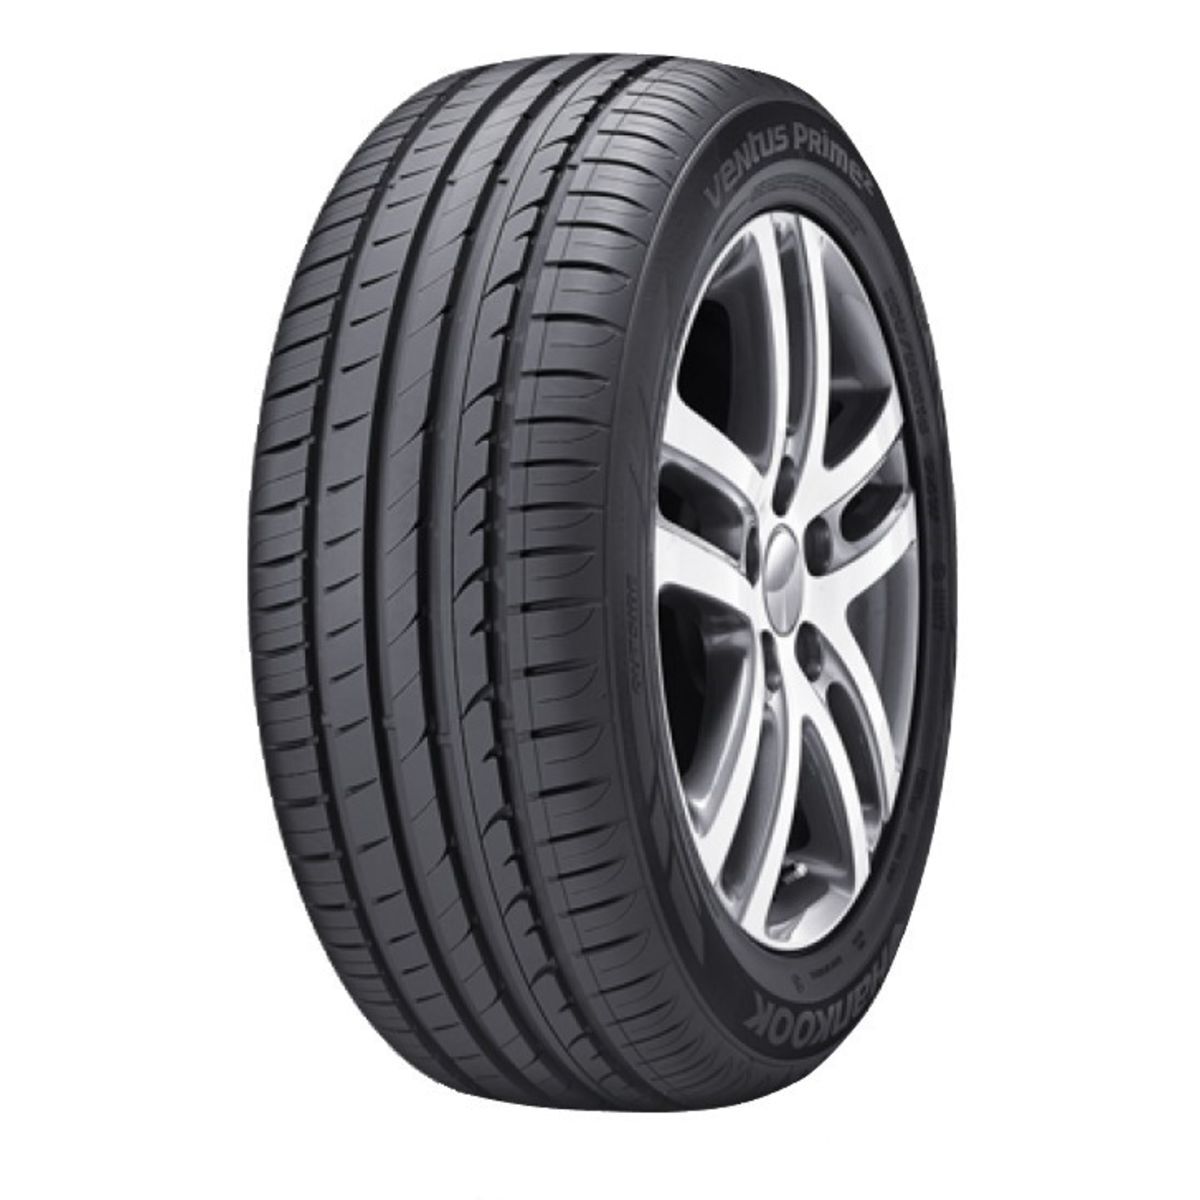 Neumáticos de verano HANKOOK Ventus Prime2 K115 225/45R18 XL 95V